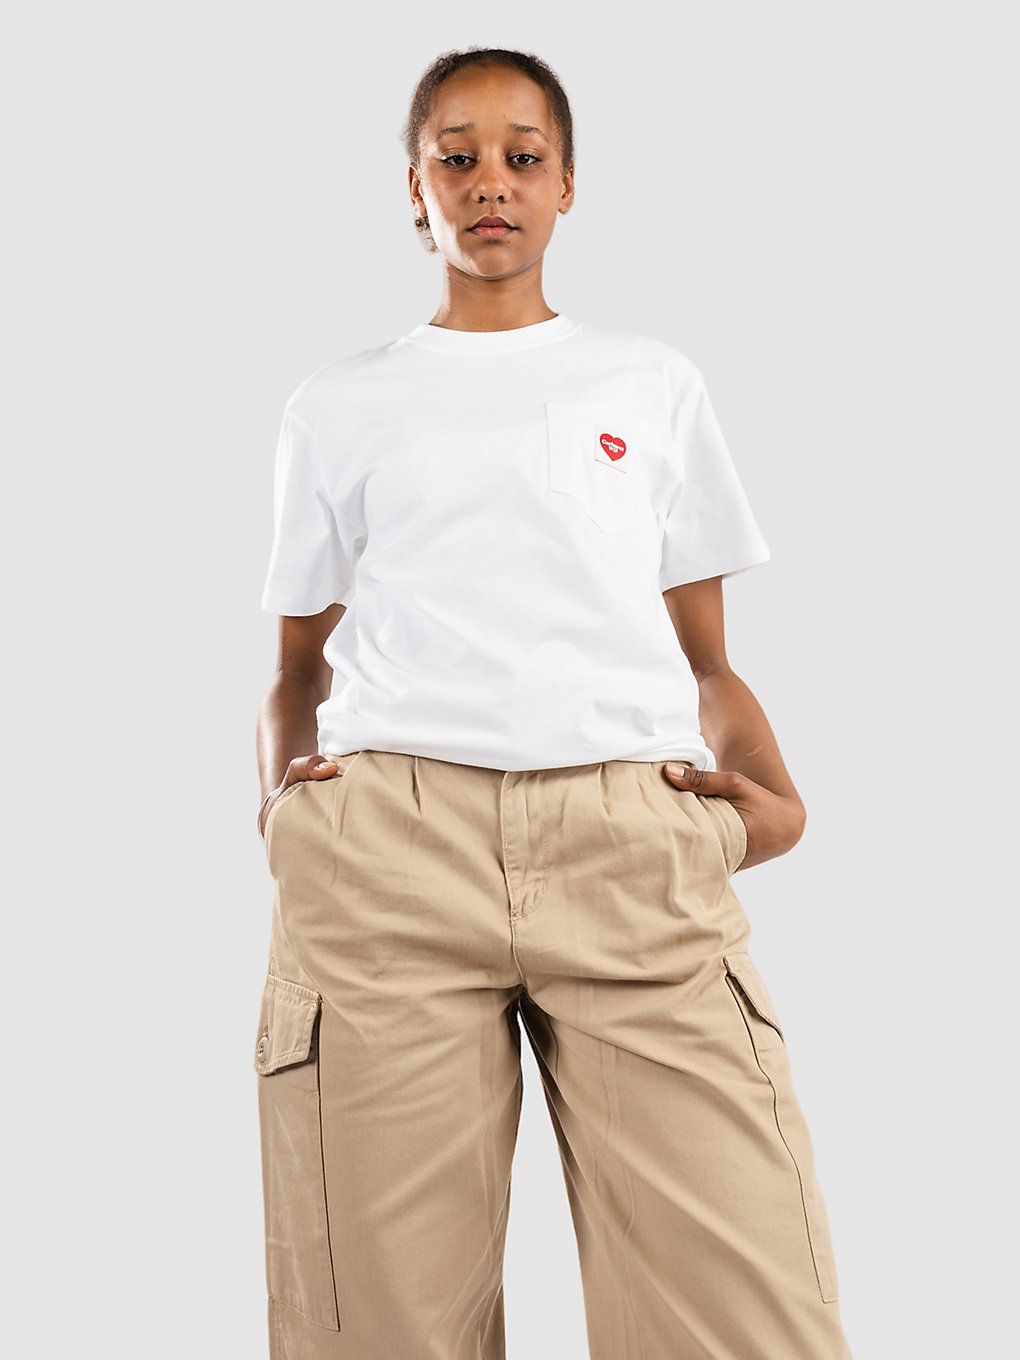 Carhartt WIP Pocket Heart T-Shirt white kaufen